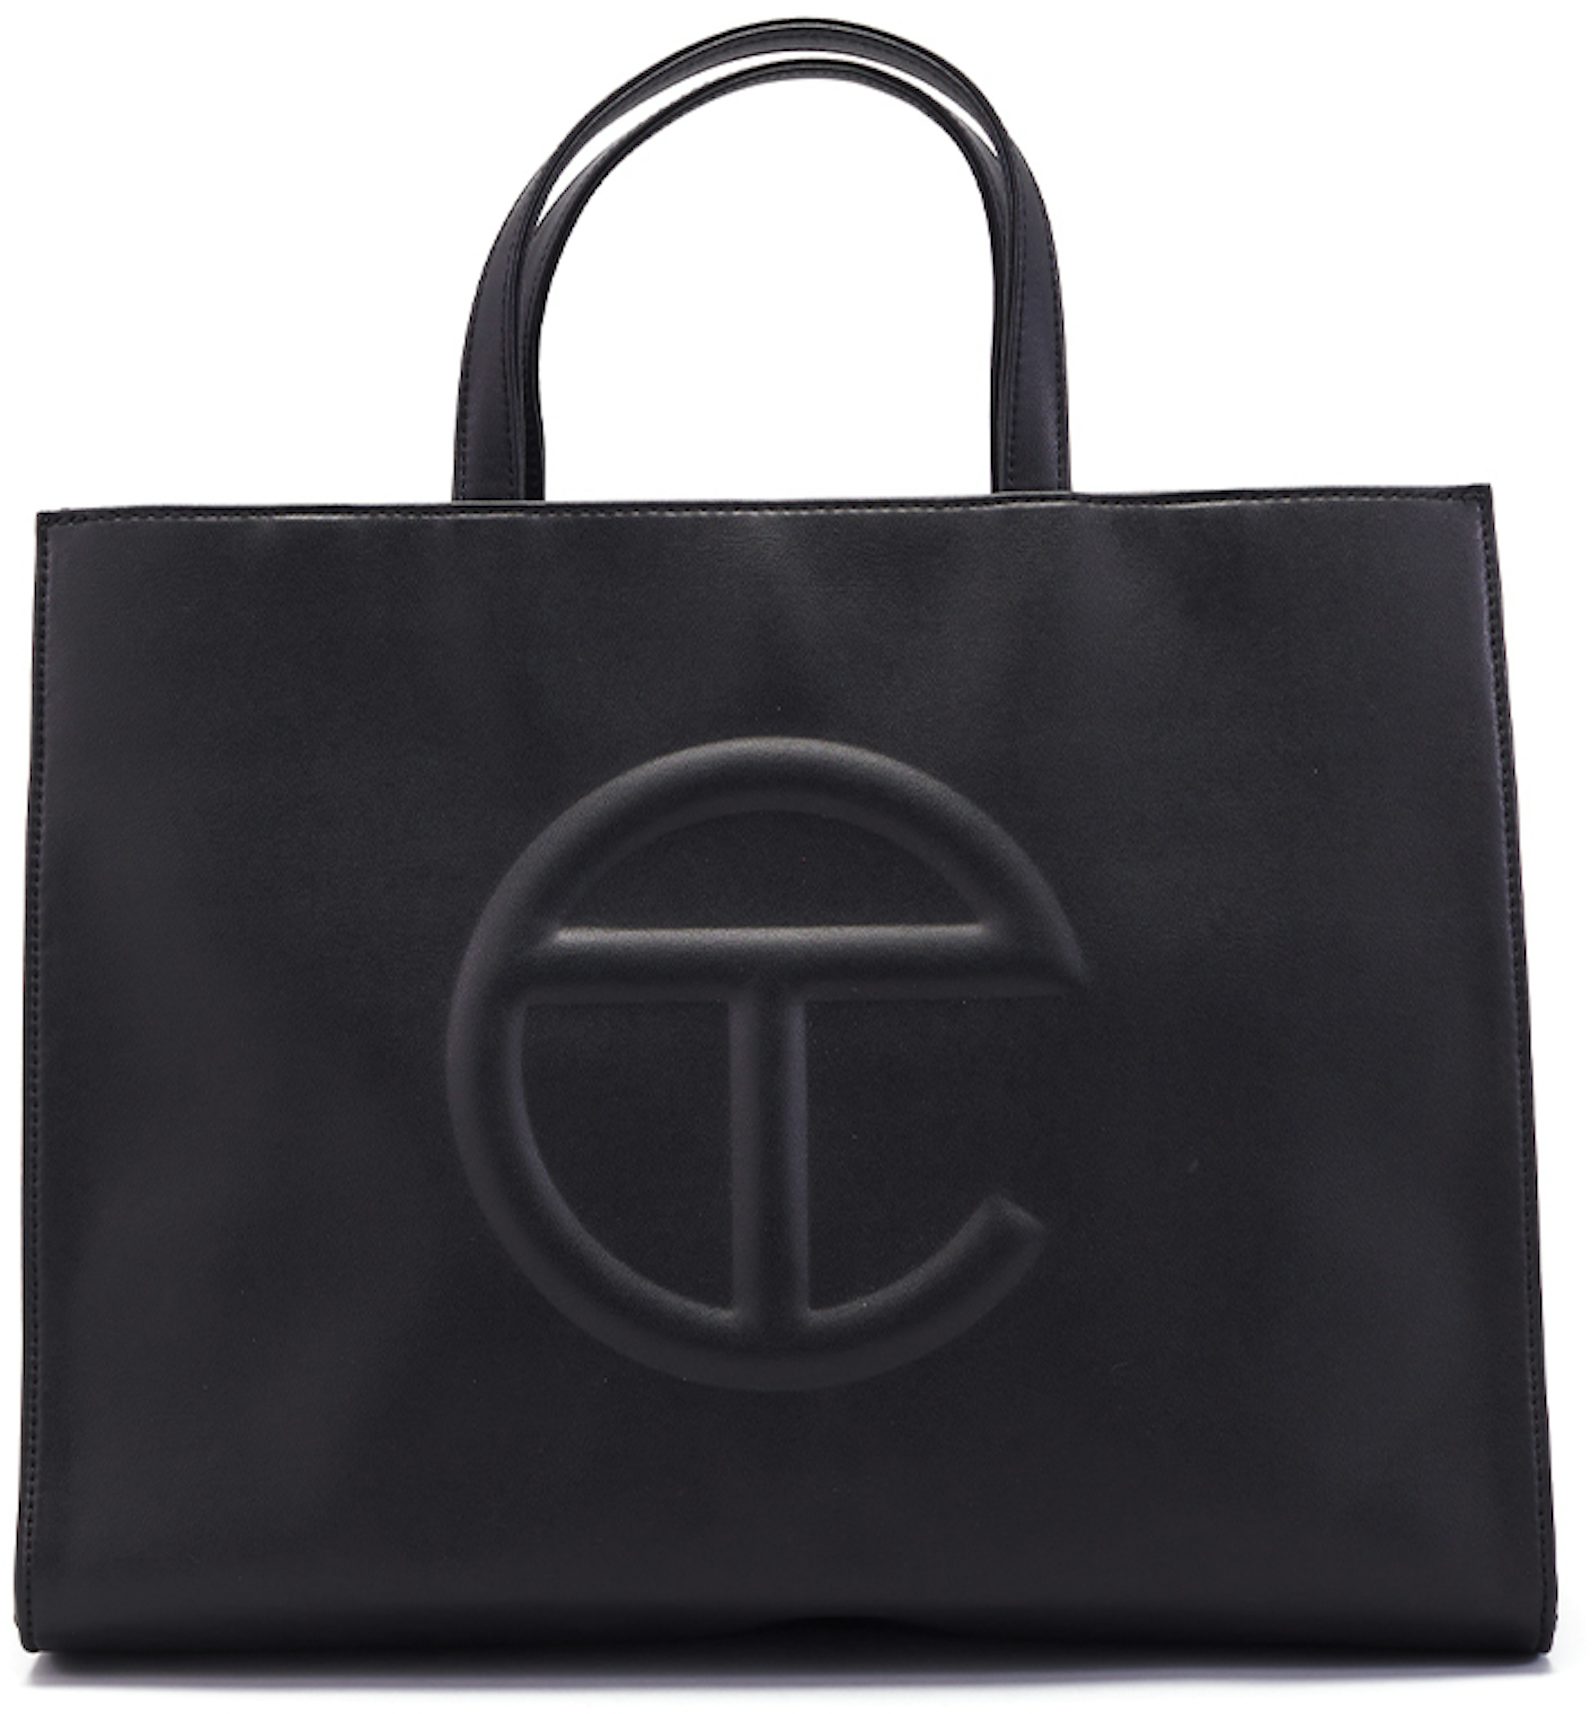 black telfar bag  Bags, Purses and bags, Bag accessories